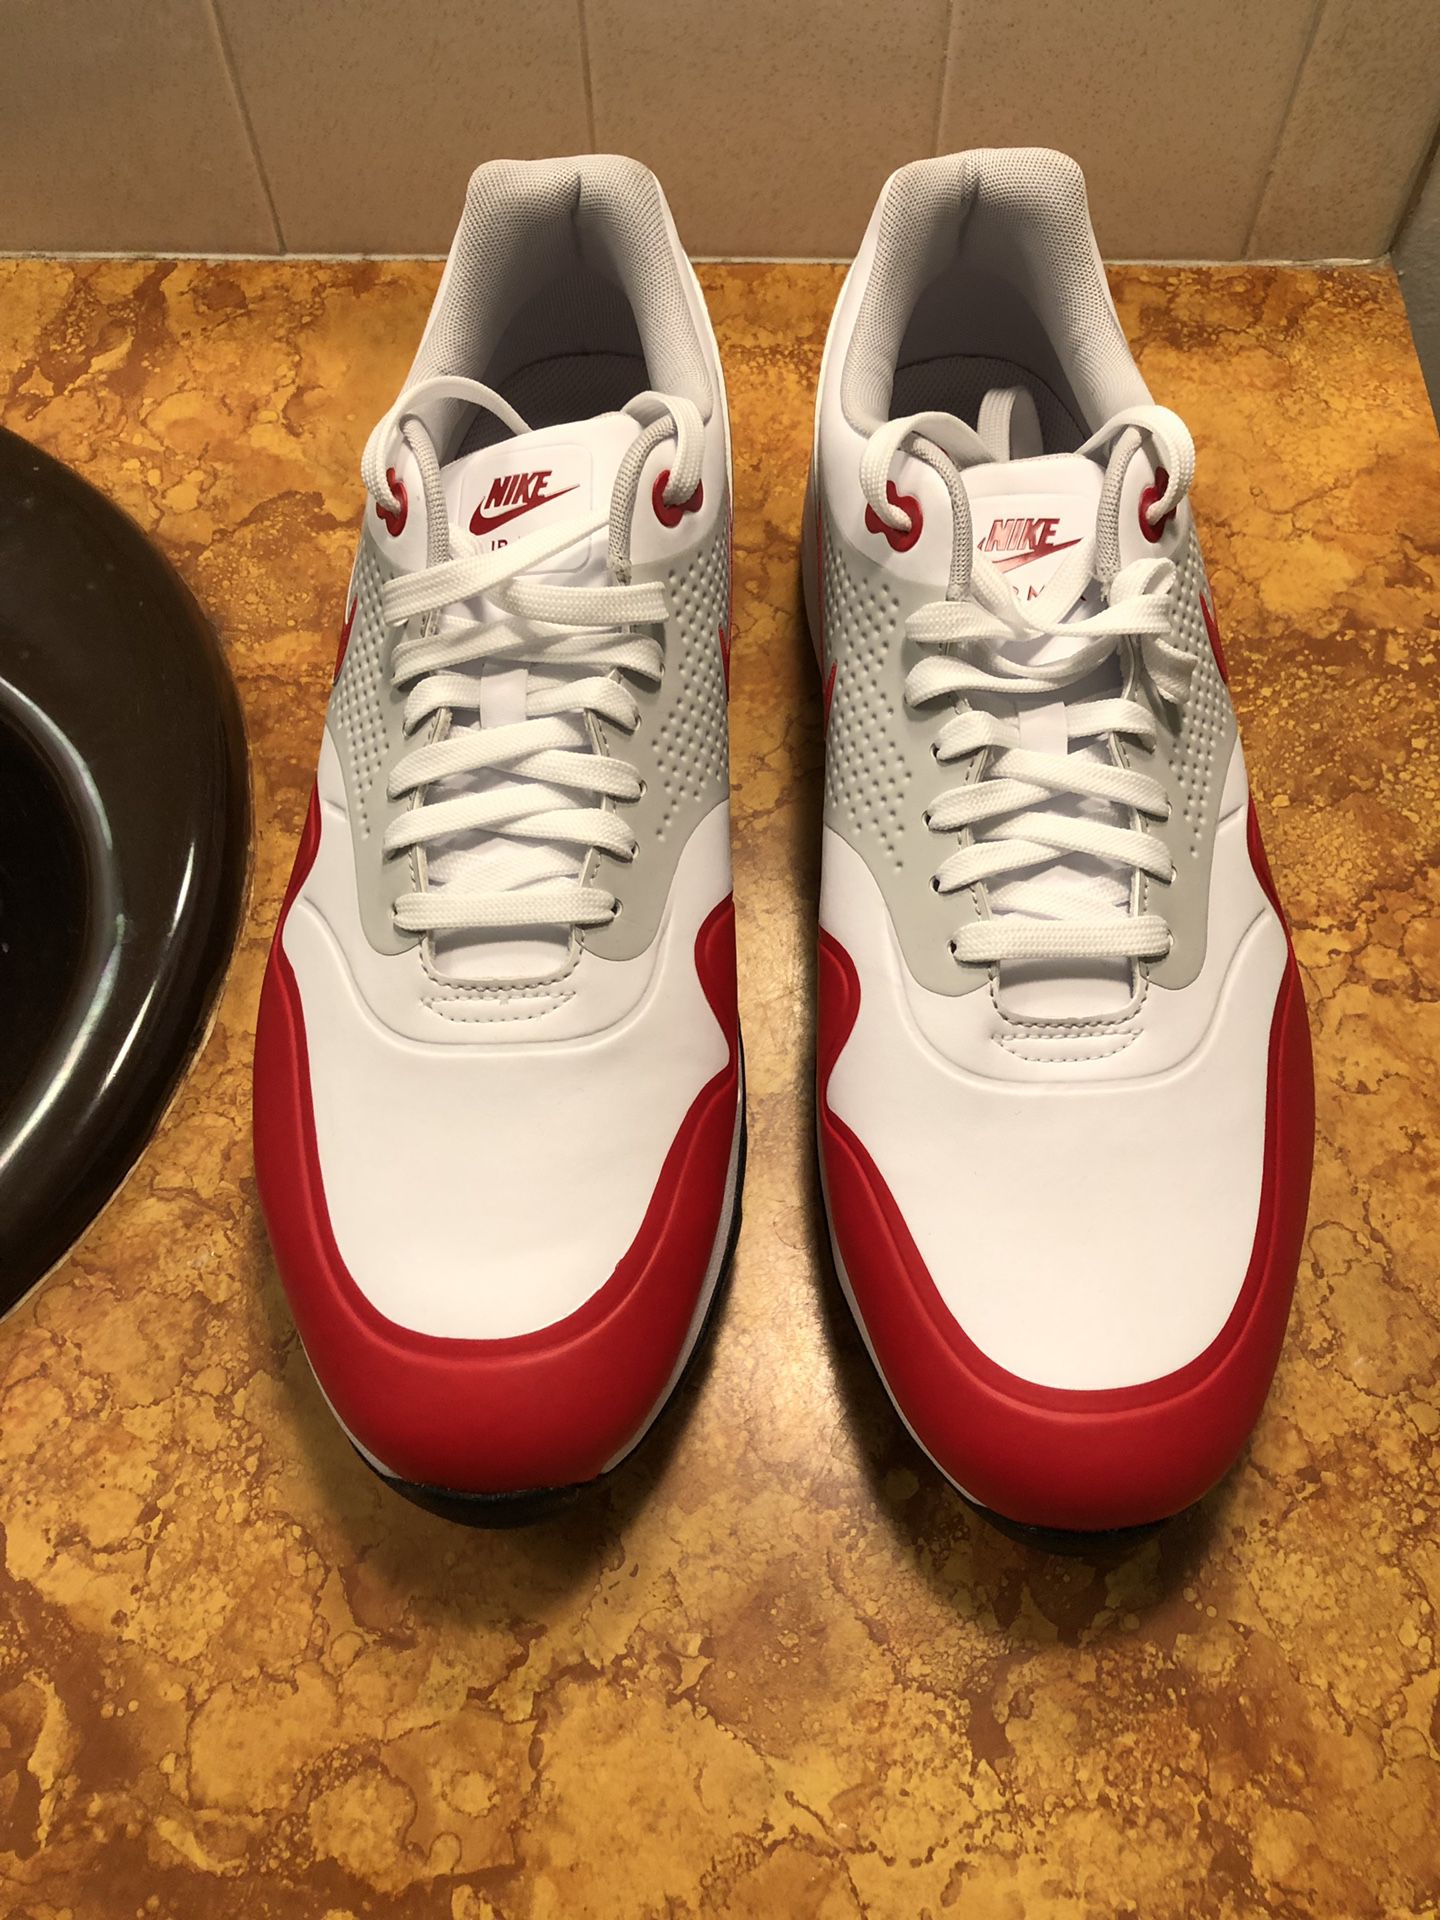 Nike Air Max Golf Shoes Size 13